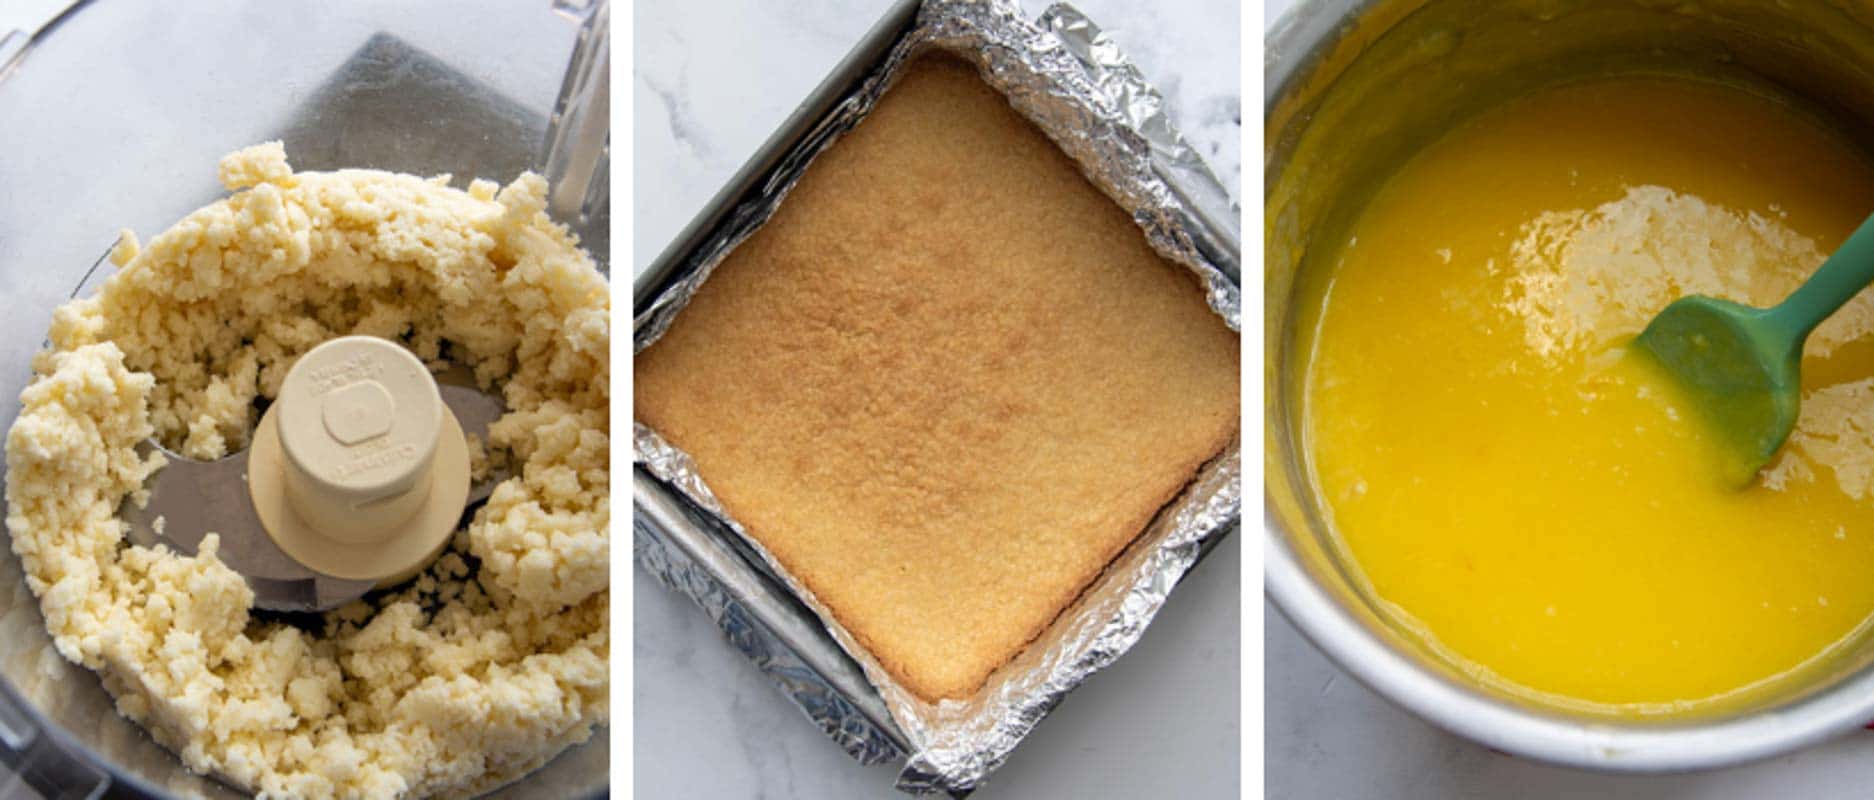 images showing how to make gluten free lemon bars recipe